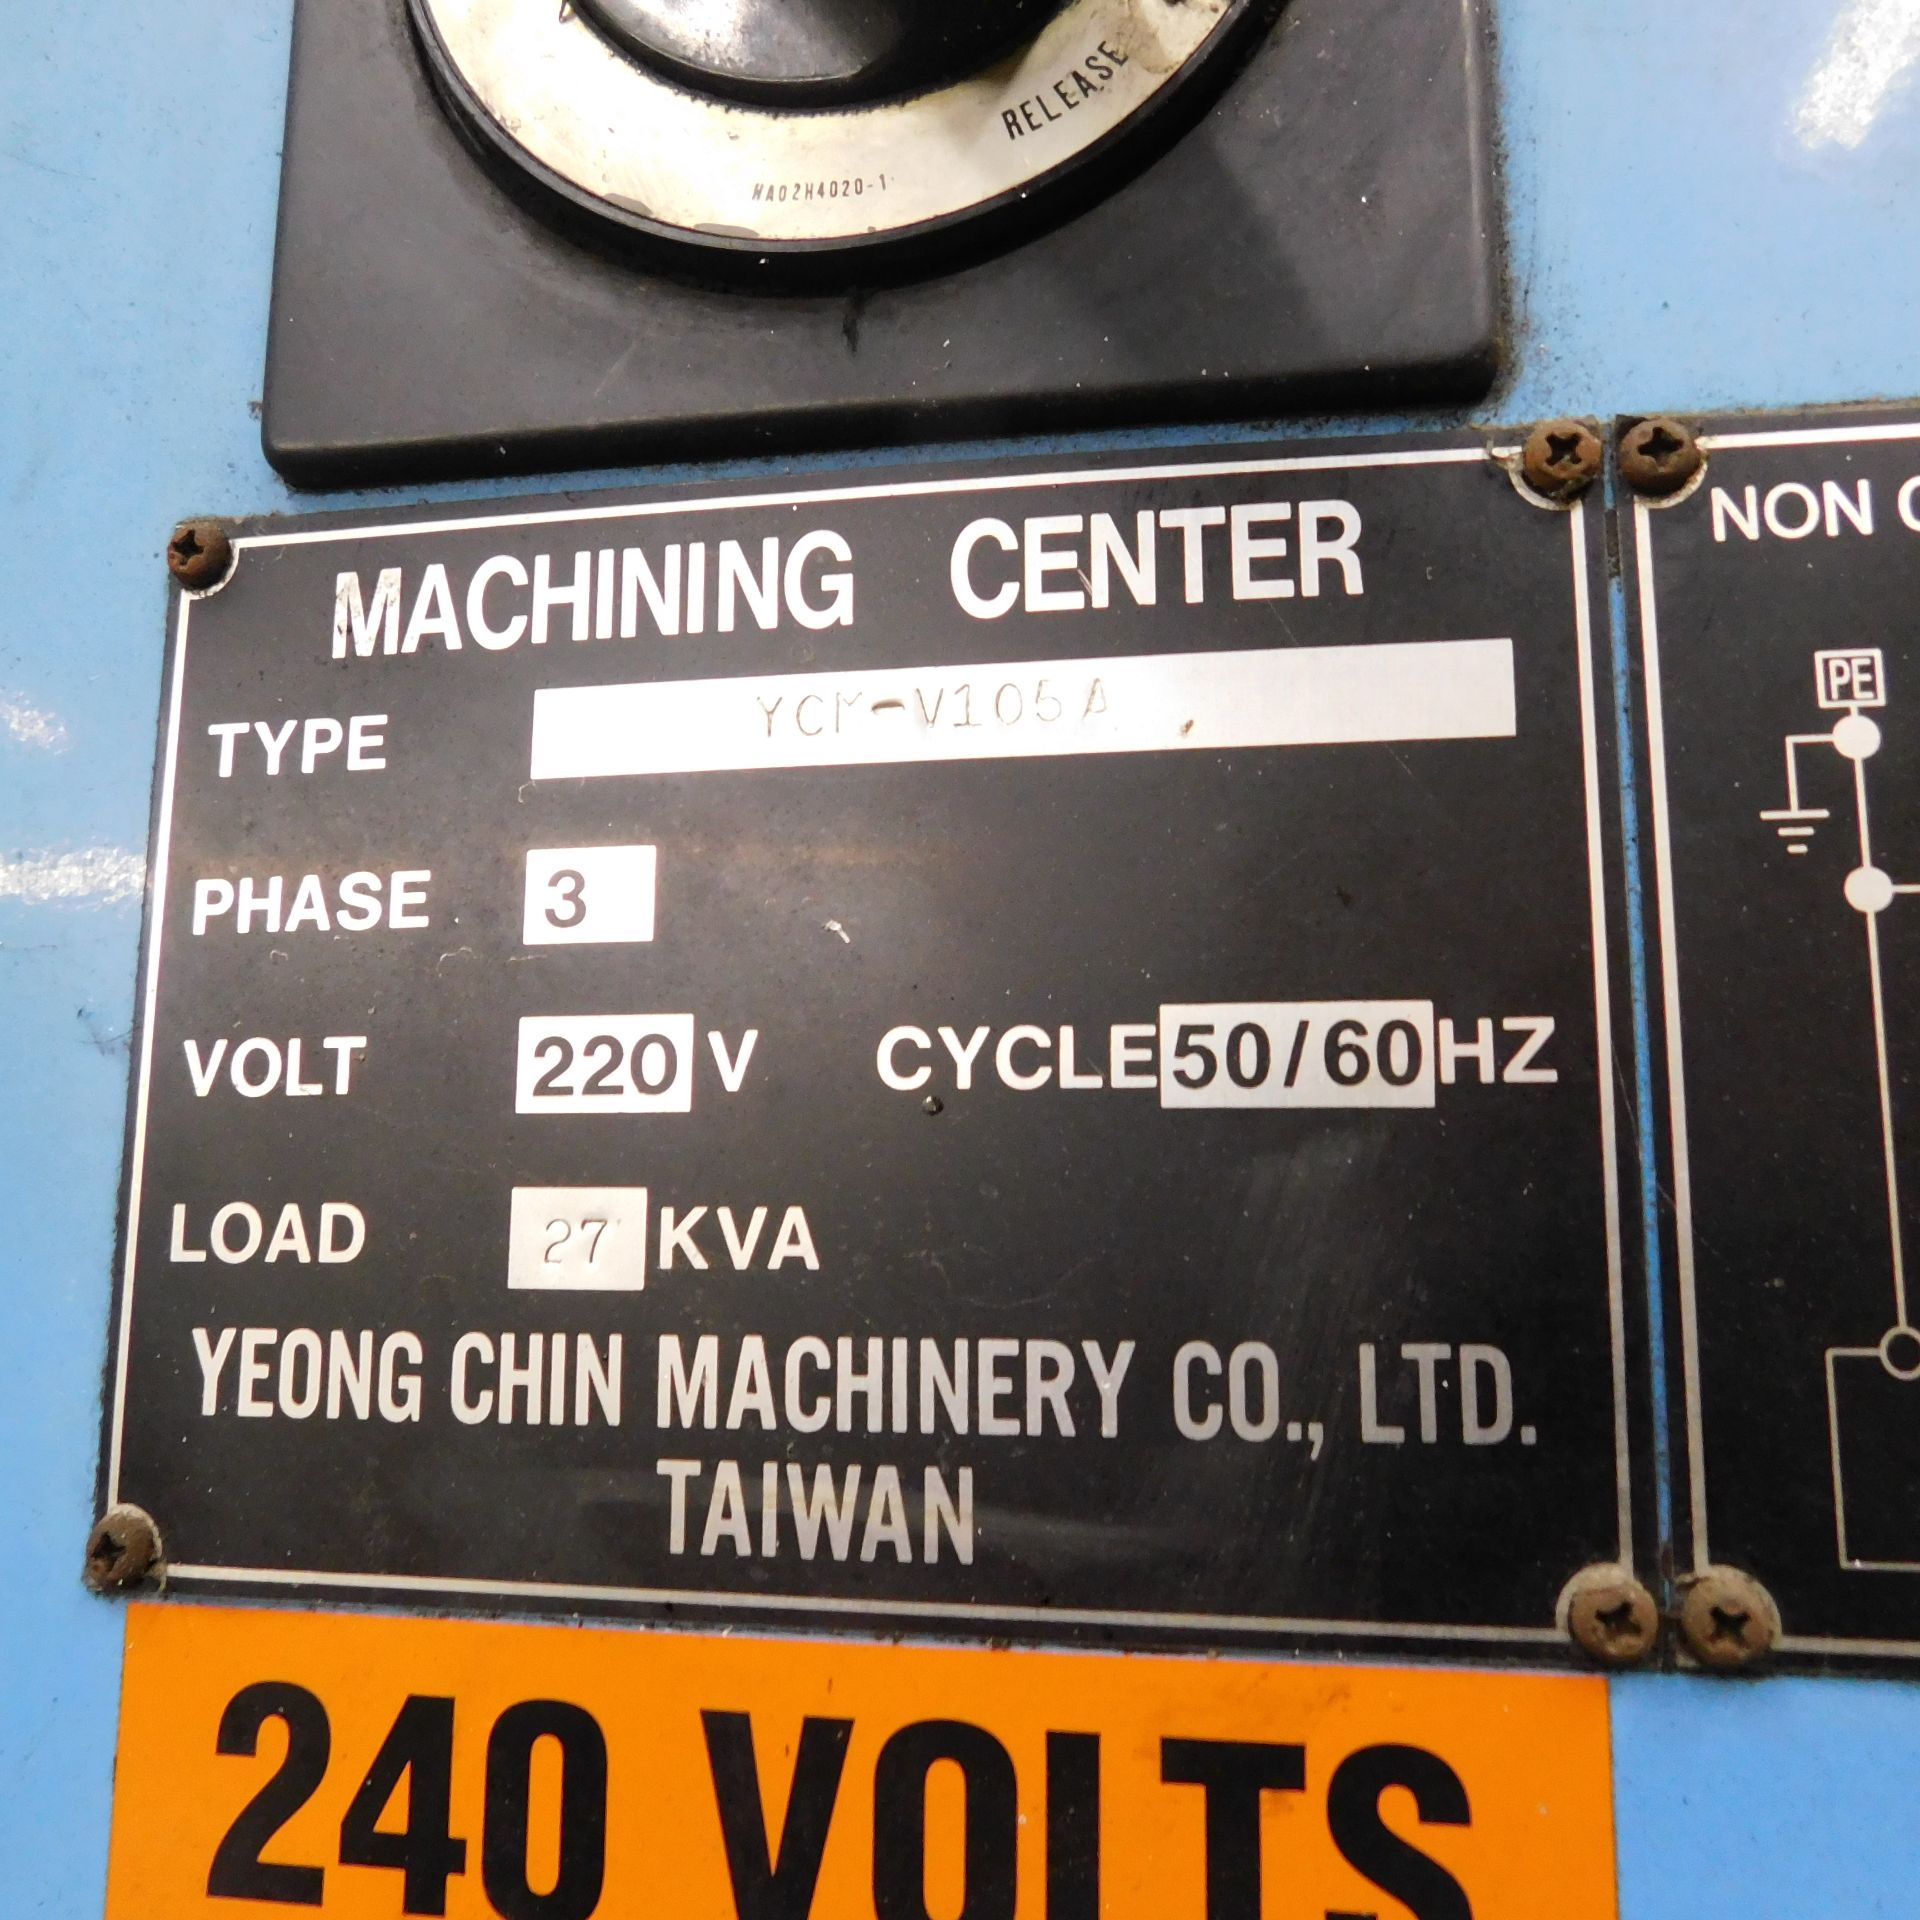 YCM Supermax Model YCM-V105A CNC Vertical Machining Center, Mitsubishi Meldas CNC Control, 40 Taper, - Image 5 of 5